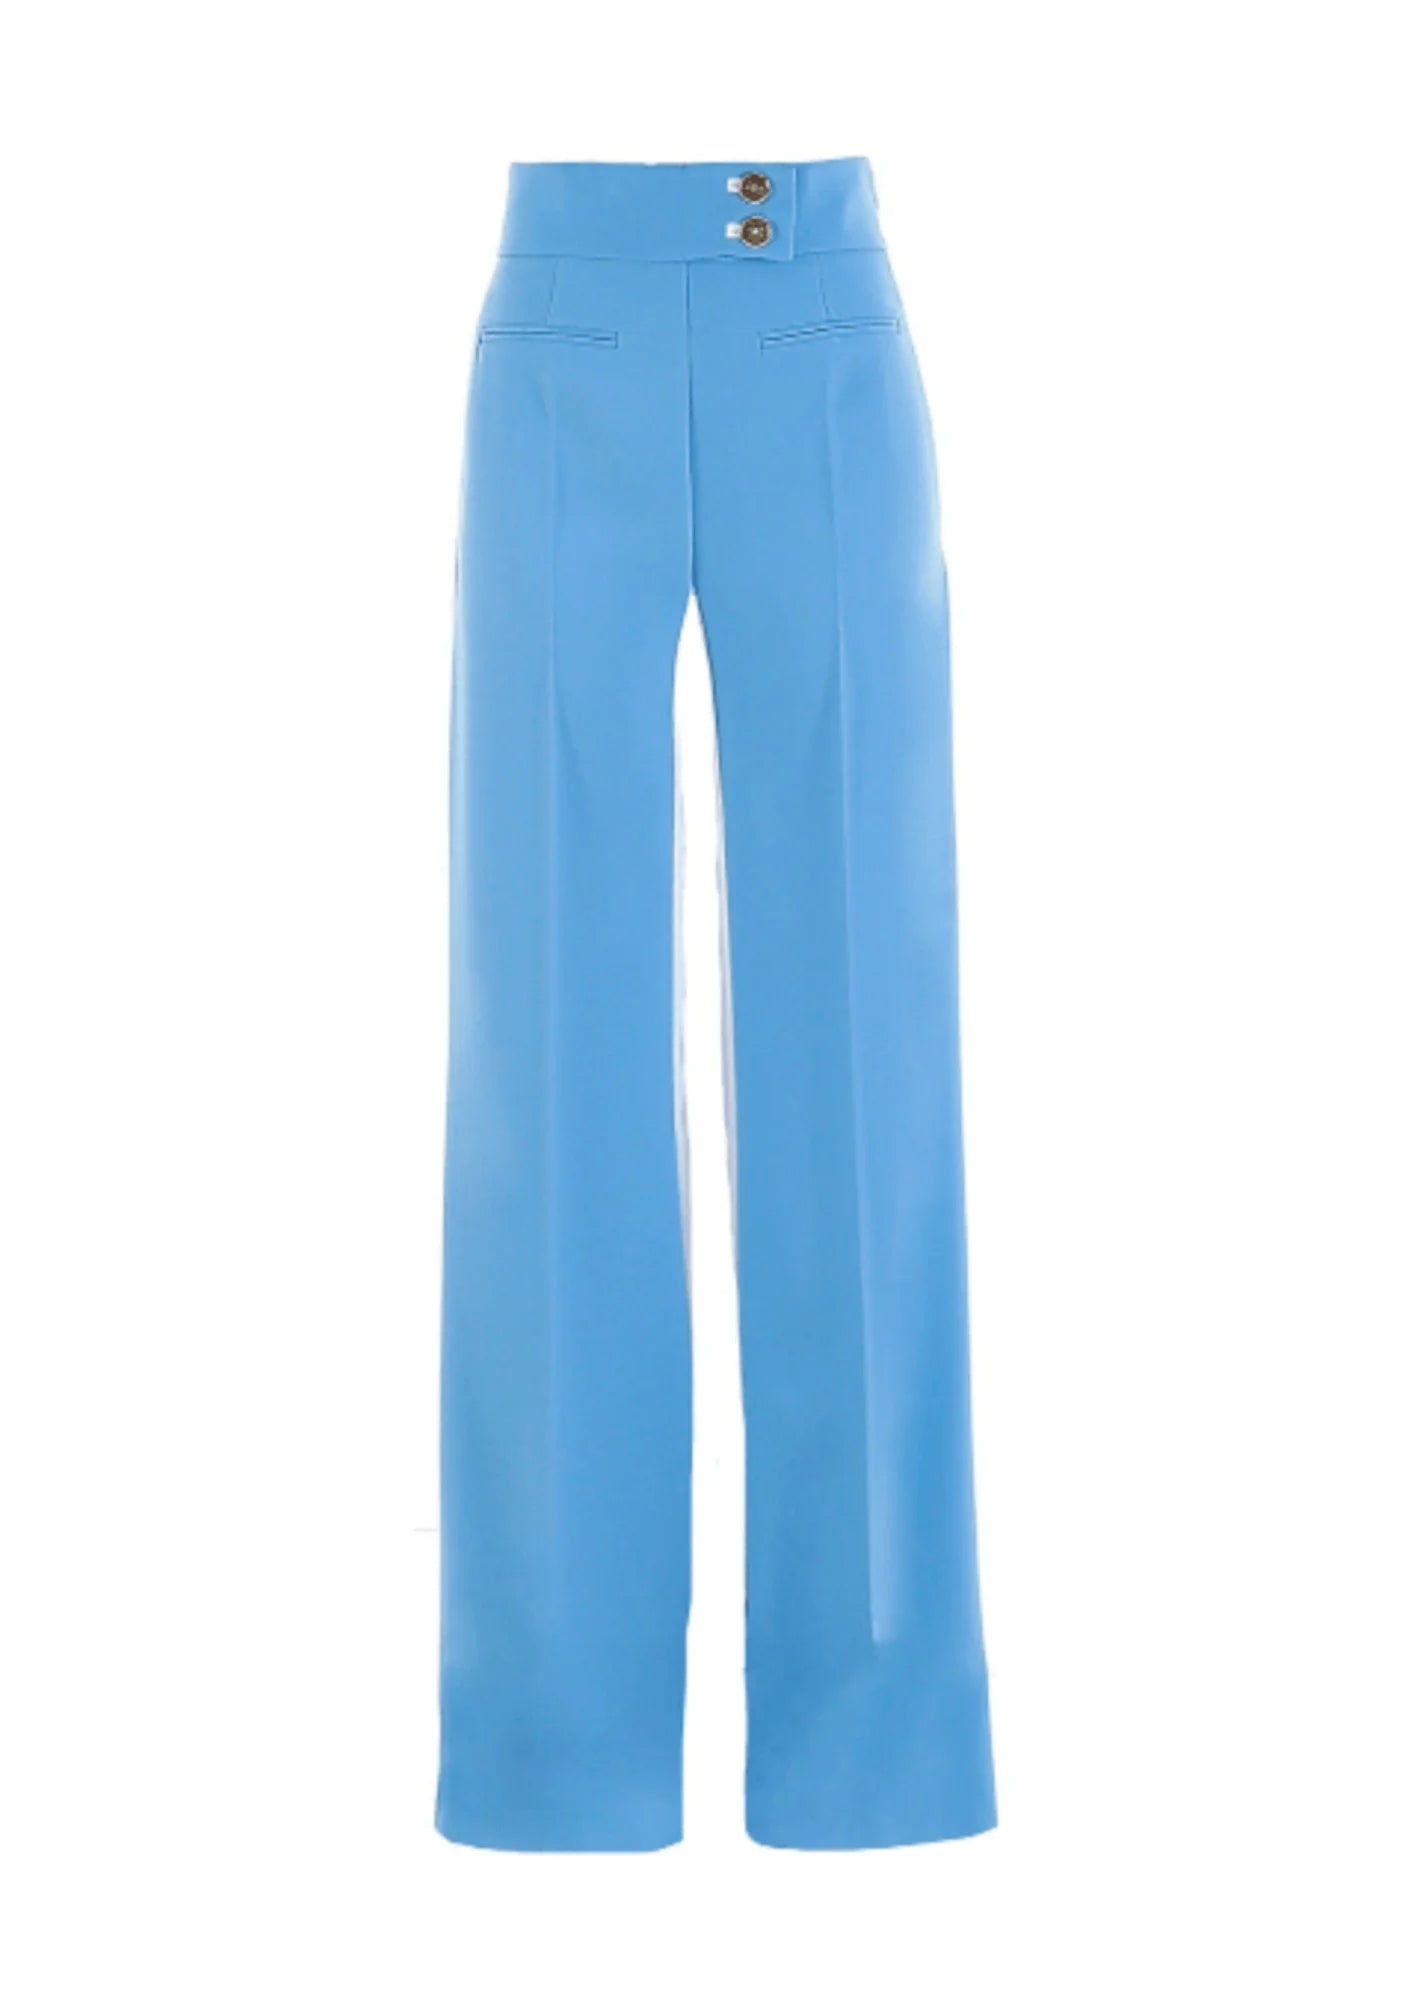 Grand pantalon bleu clair